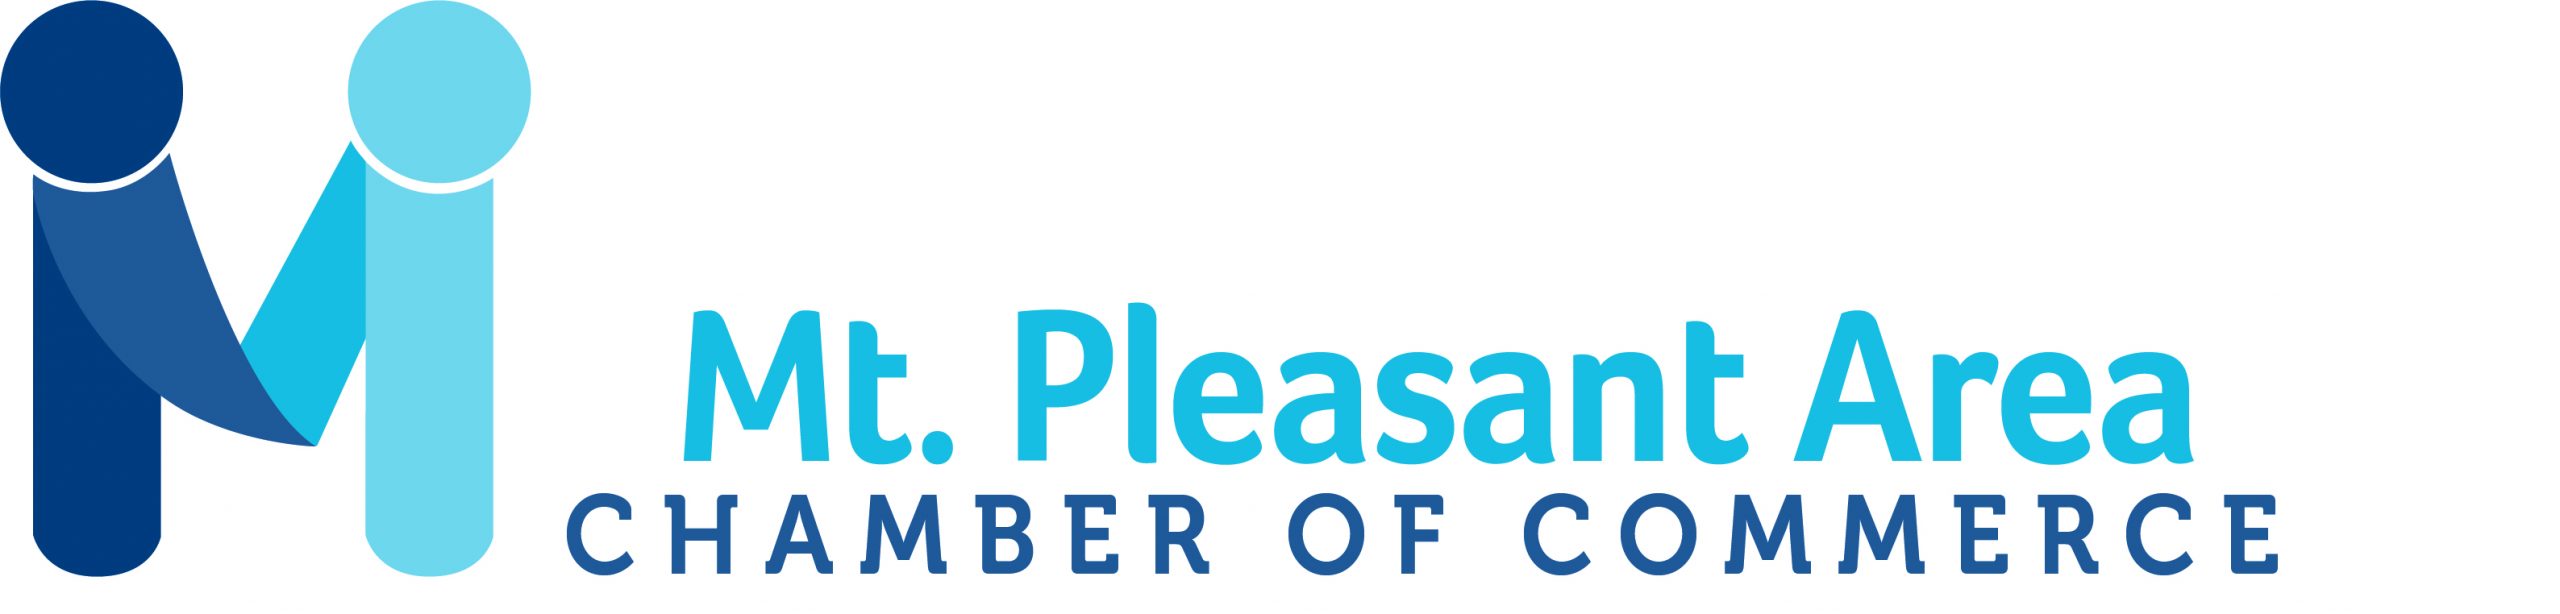 Mt. Pleasant Chamber of Commerce Logo